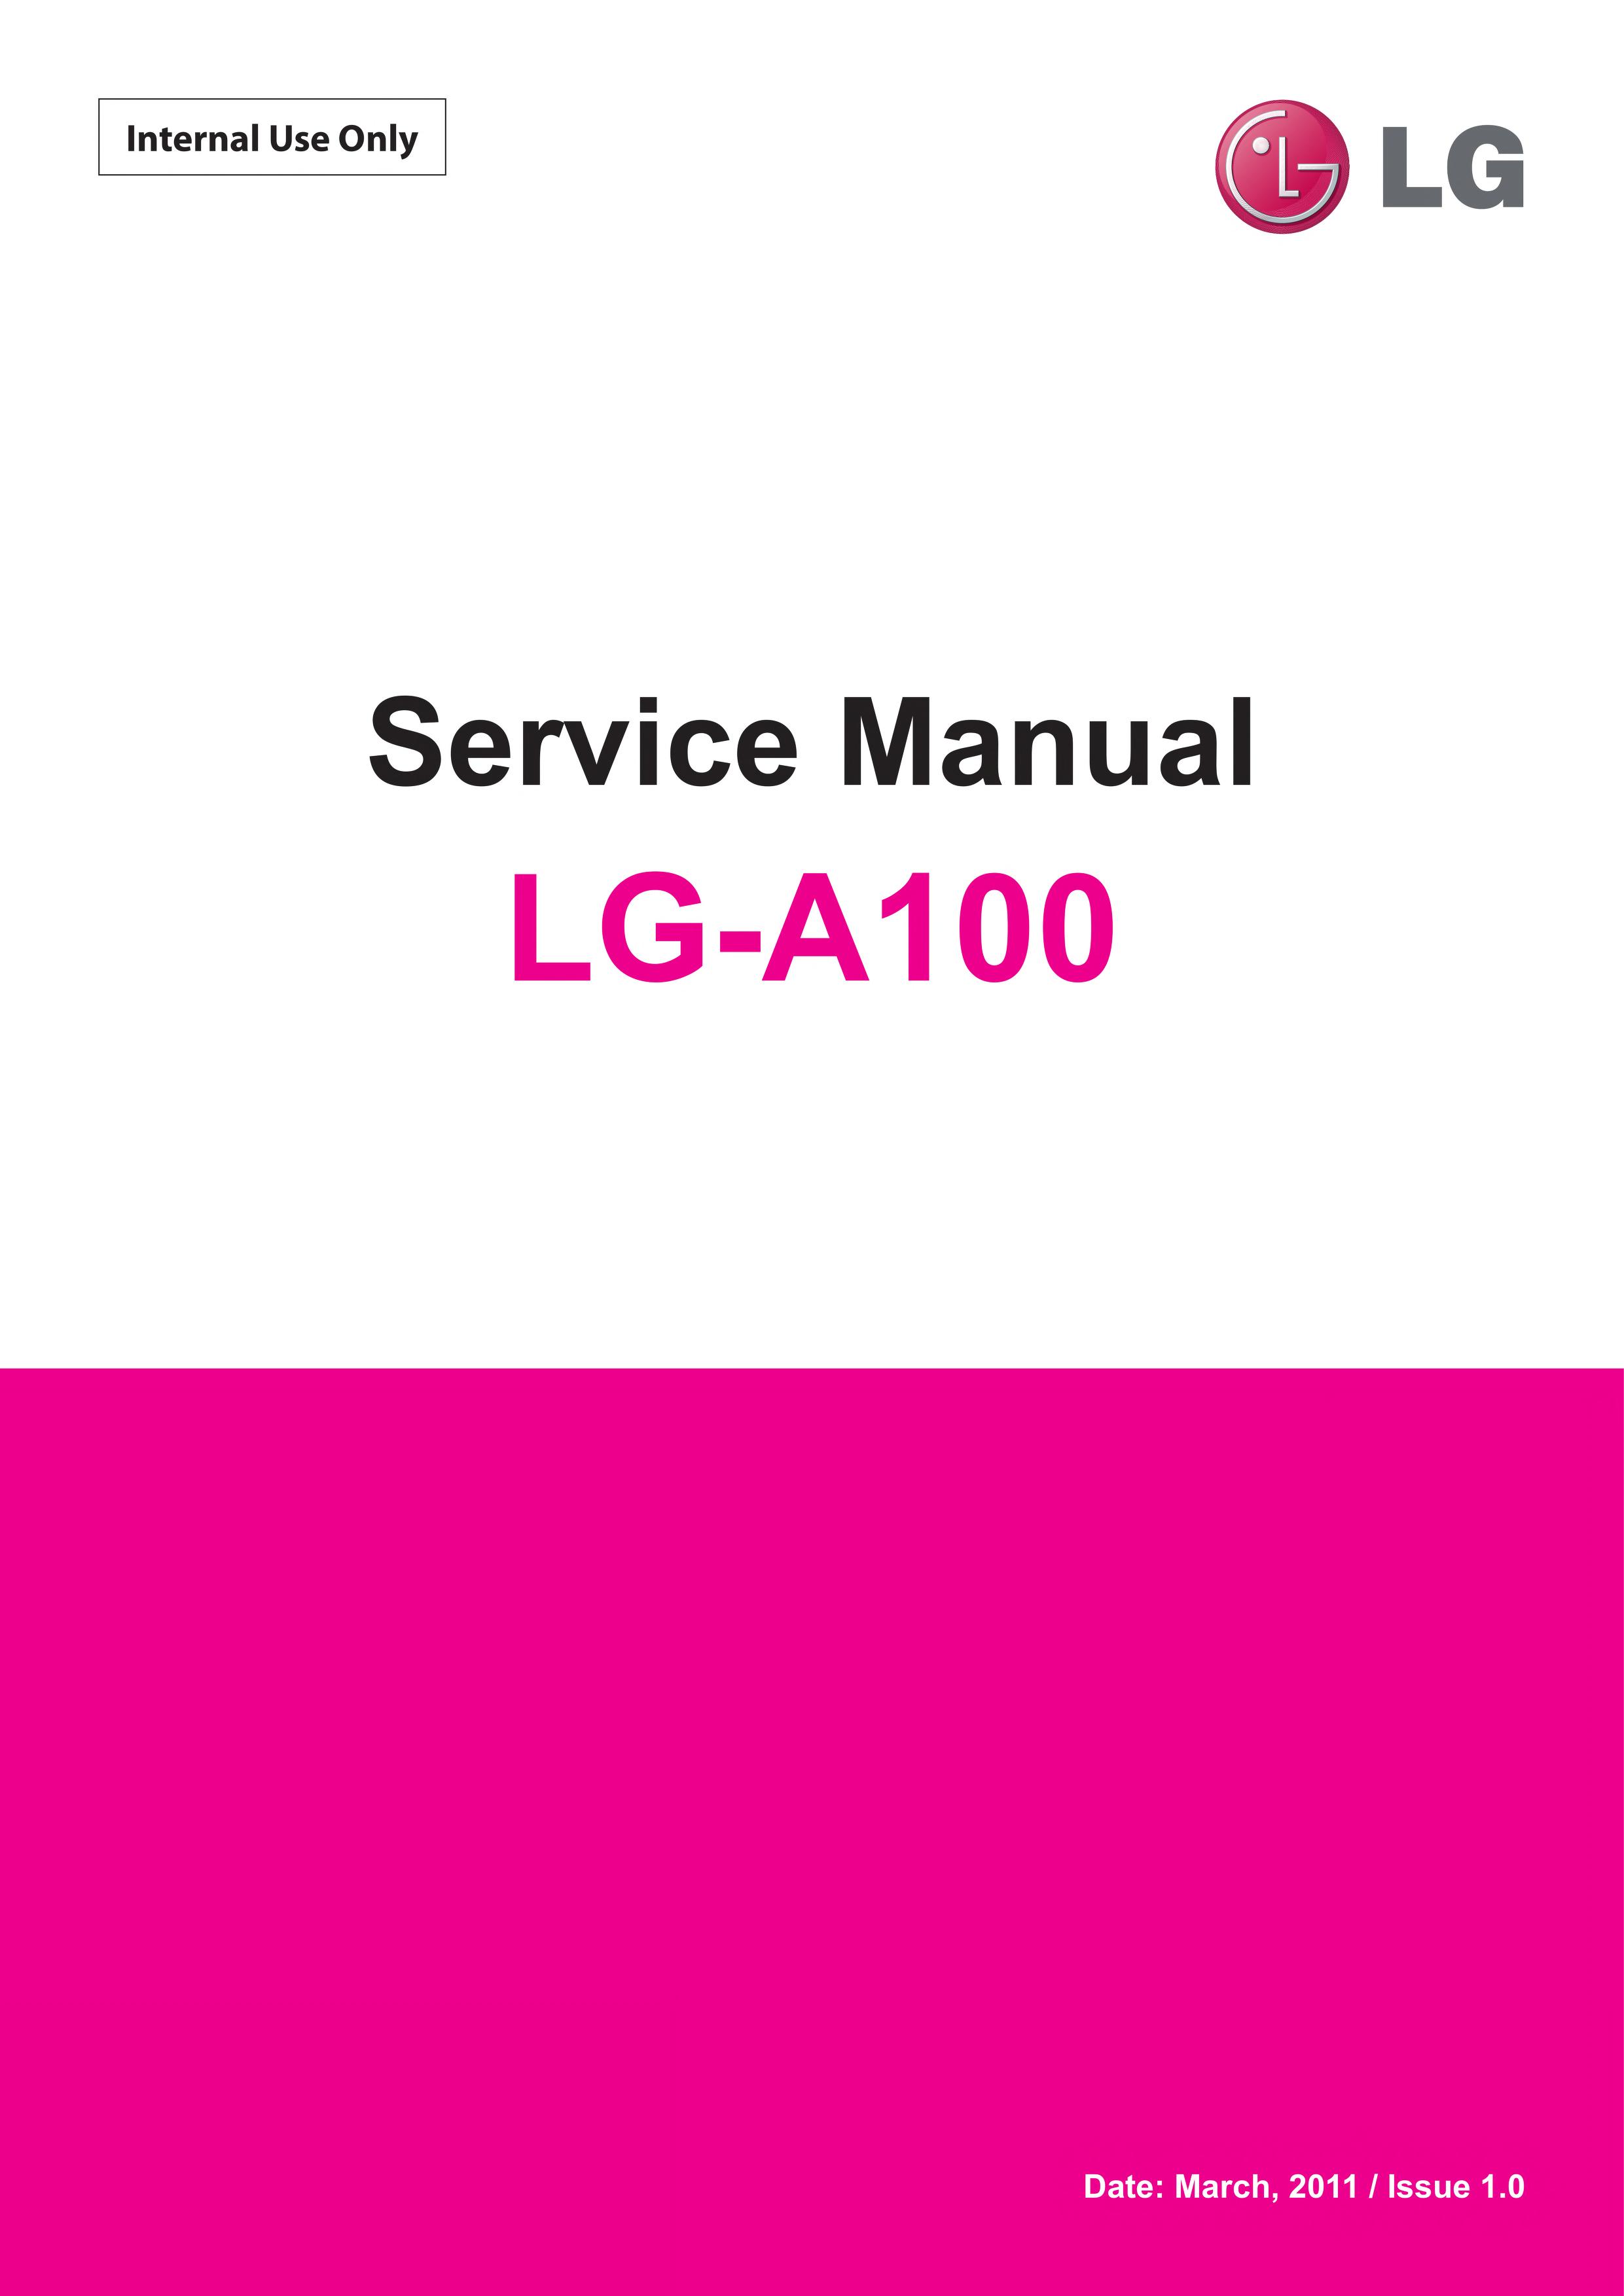 Service manuals free download donod